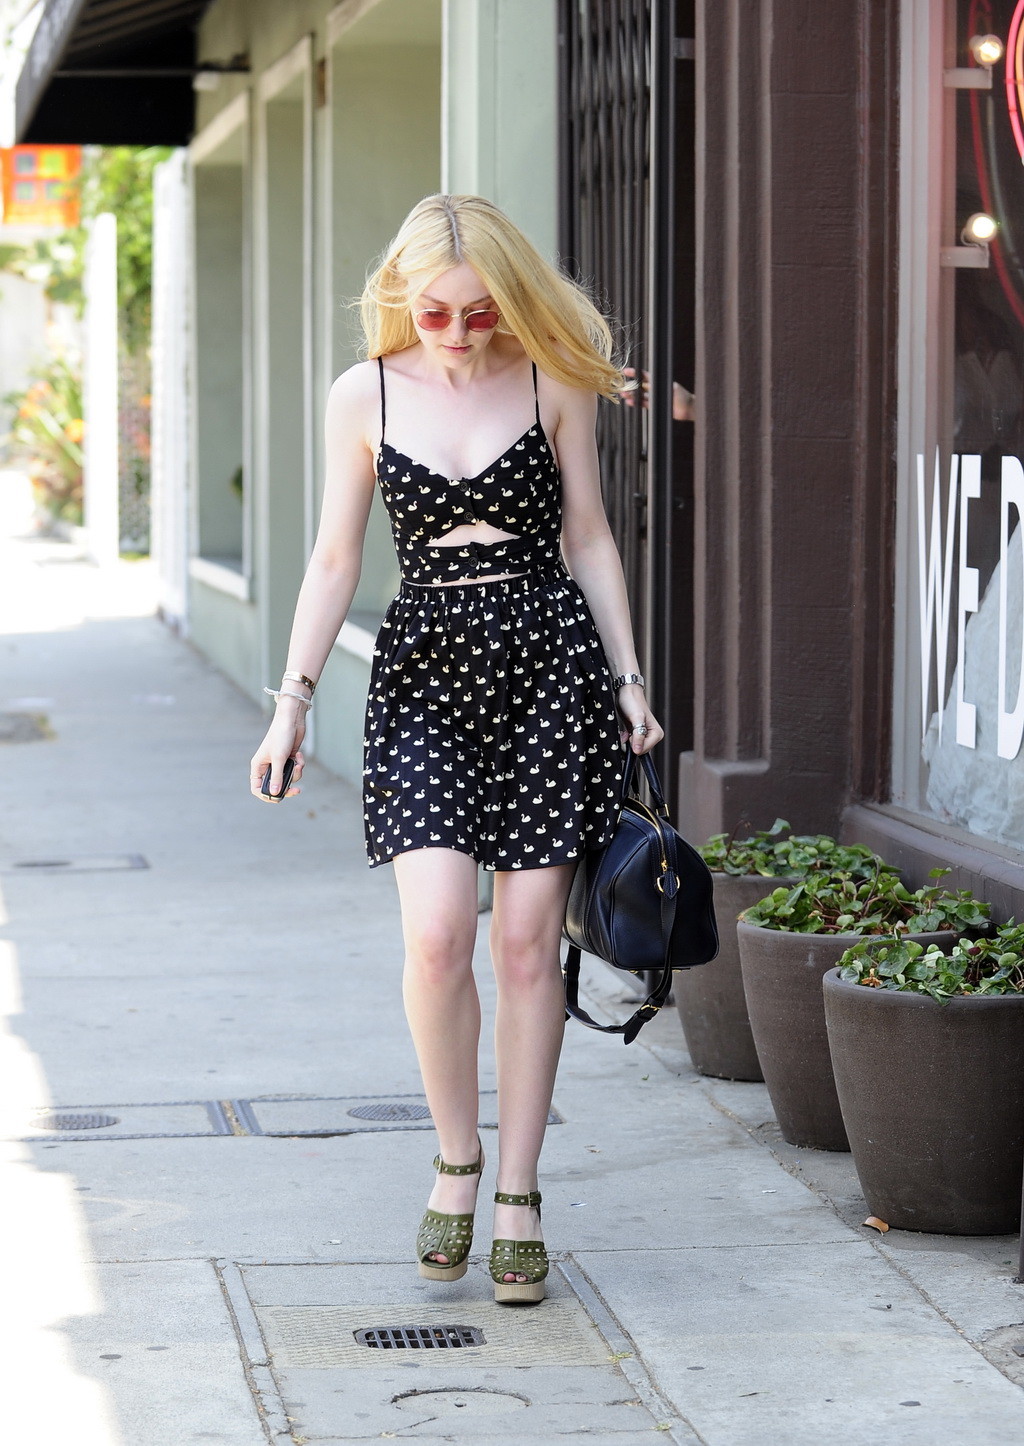 Dakota fanning porte une mini robe minuscule lors d'une promenade à Beverly Hills ensoleillée.
 #75259334